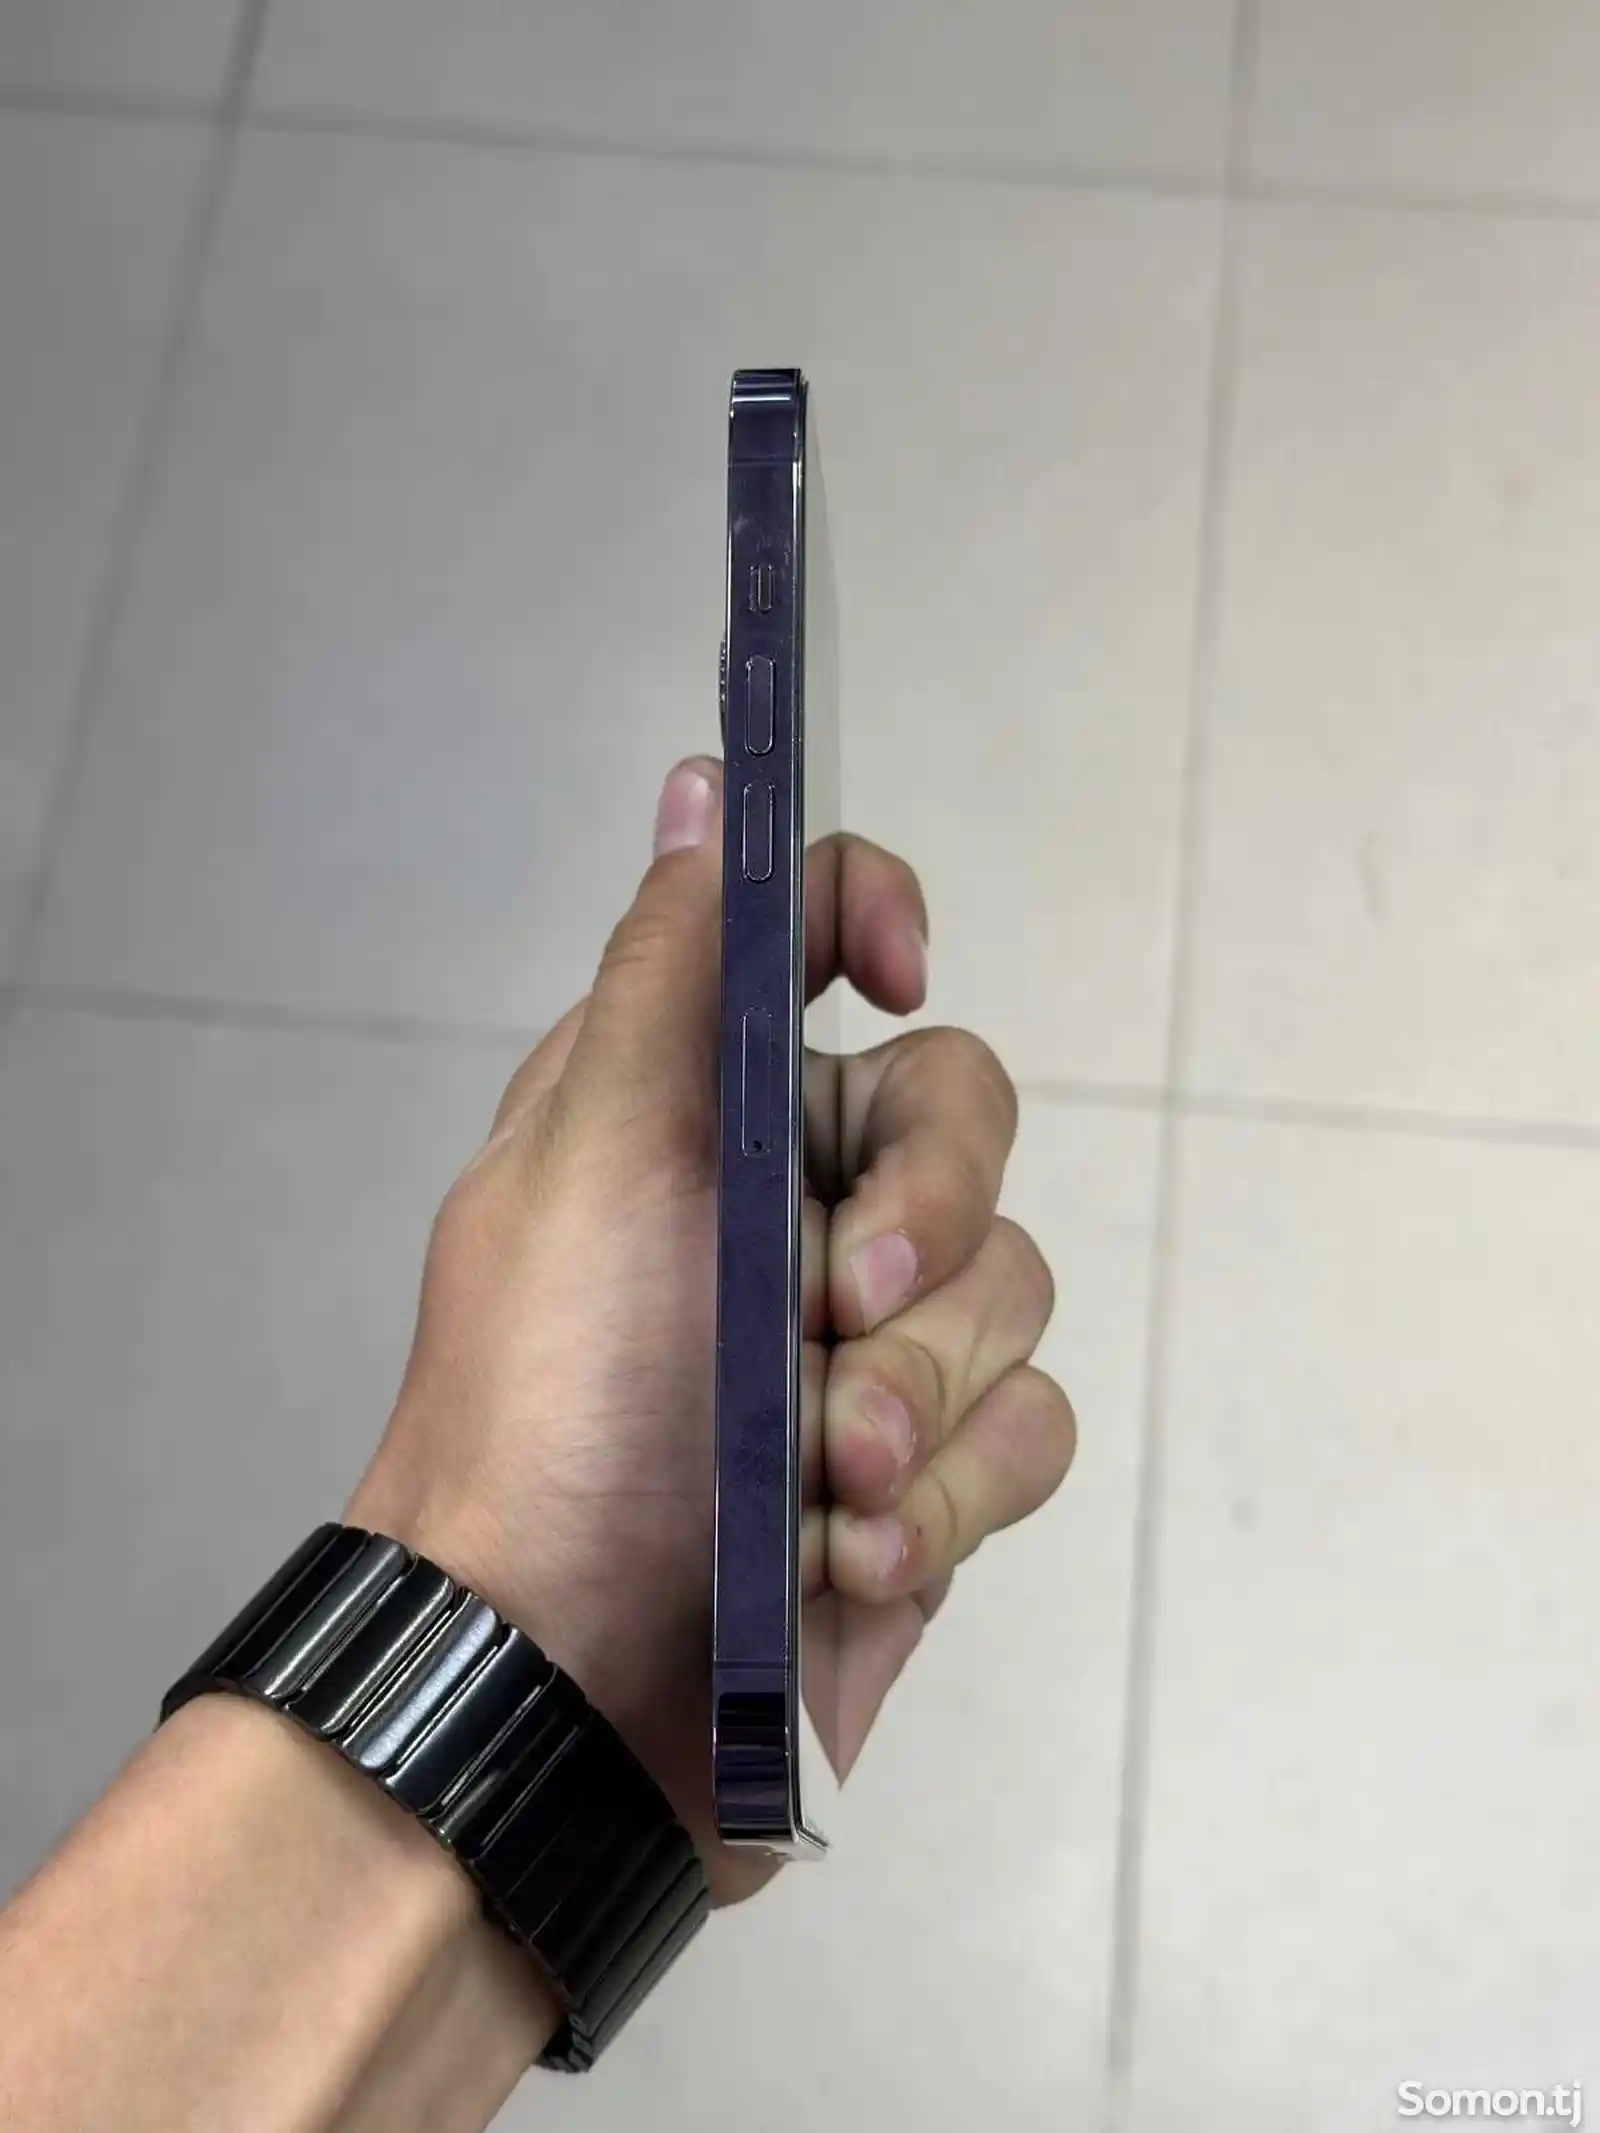 Apple iPhone 14 Pro Max, 512 gb, Deep Purple-1